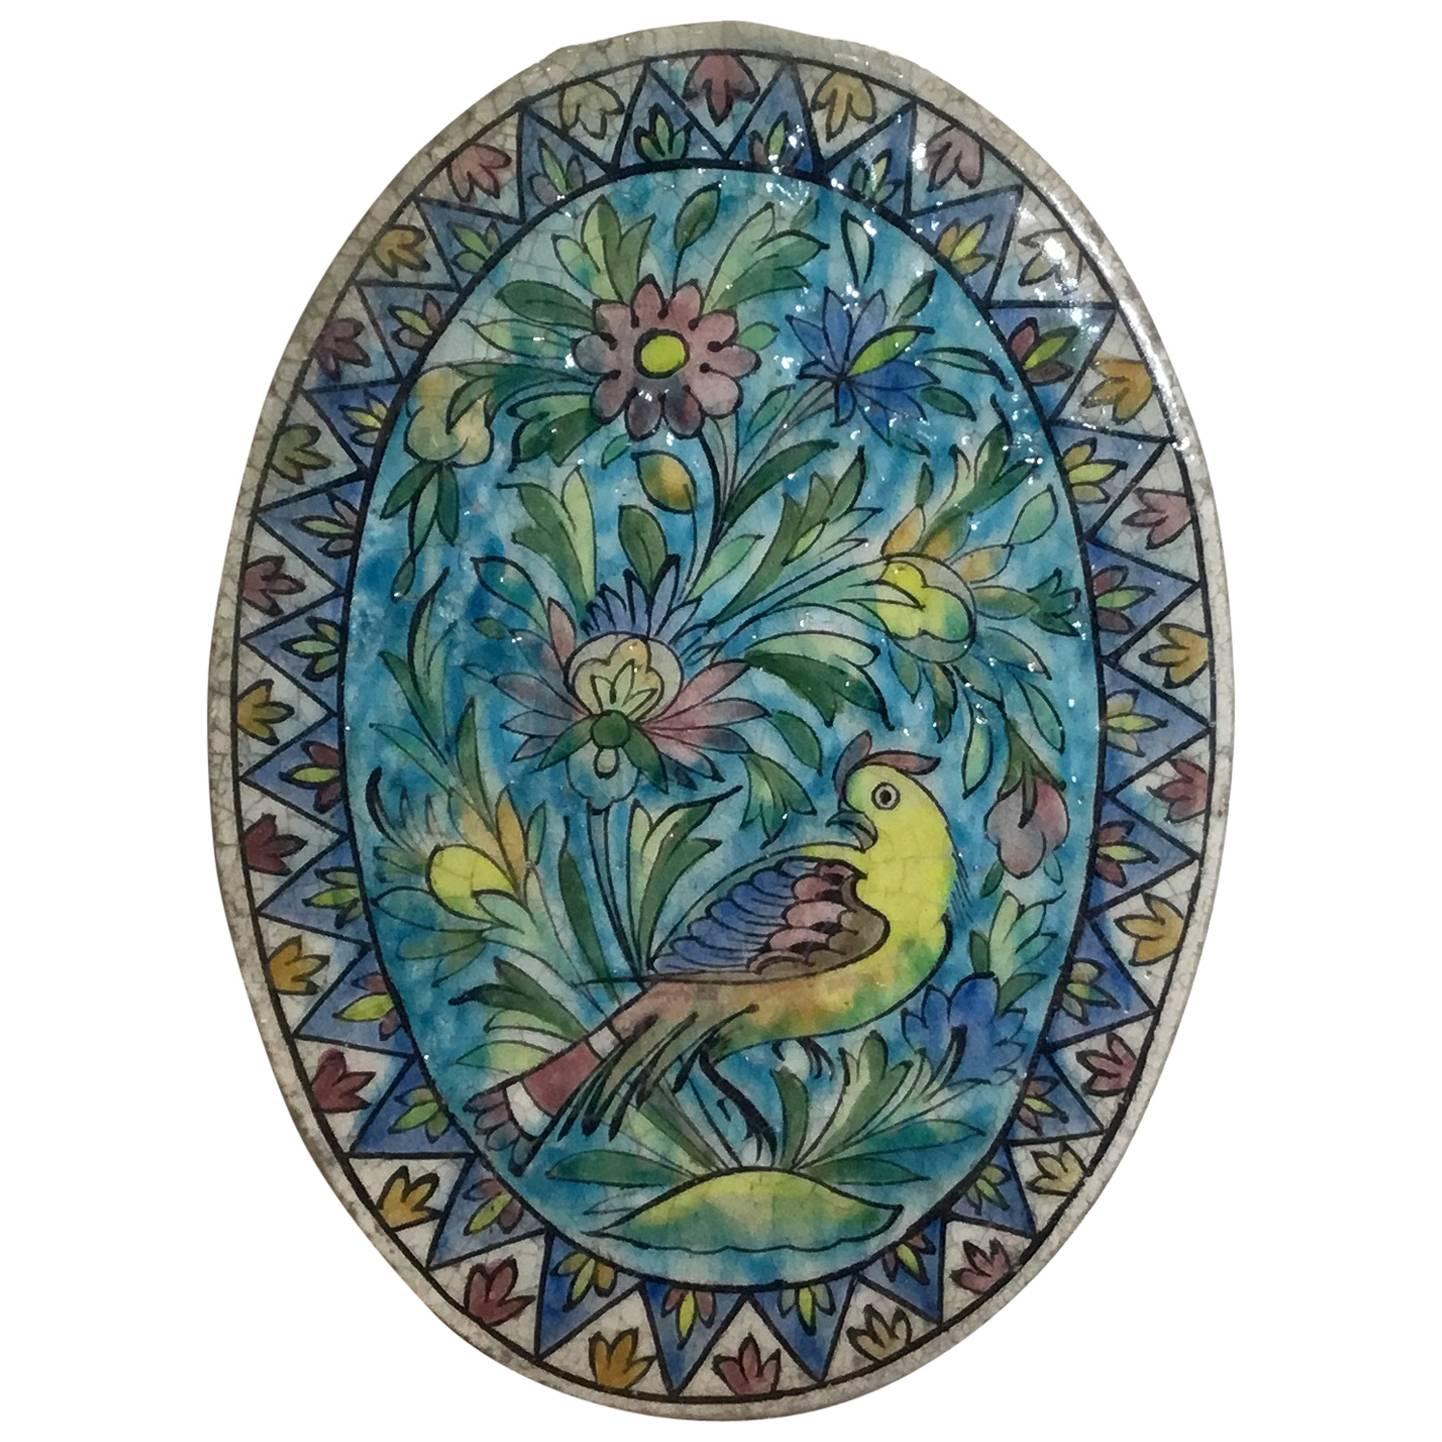 Vintage Persian Oval Ceramic Tile